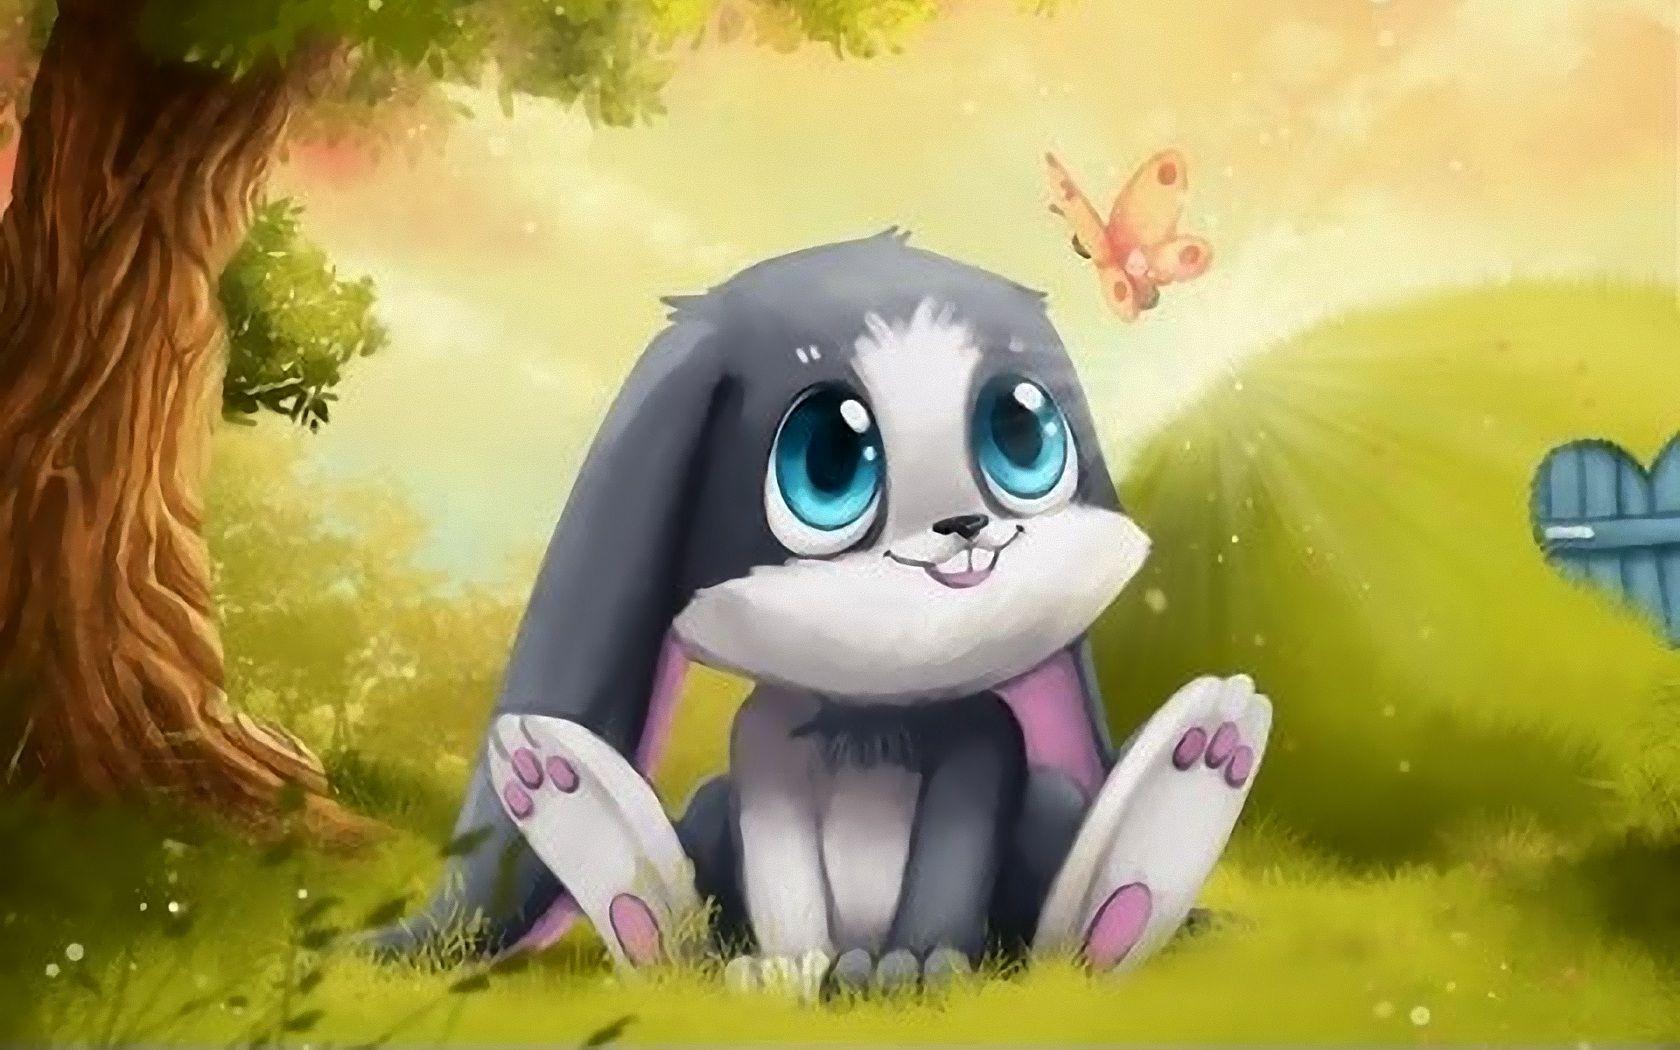 Cute Cartoon Bunny Wallpapers - Top Hình Ảnh Đẹp